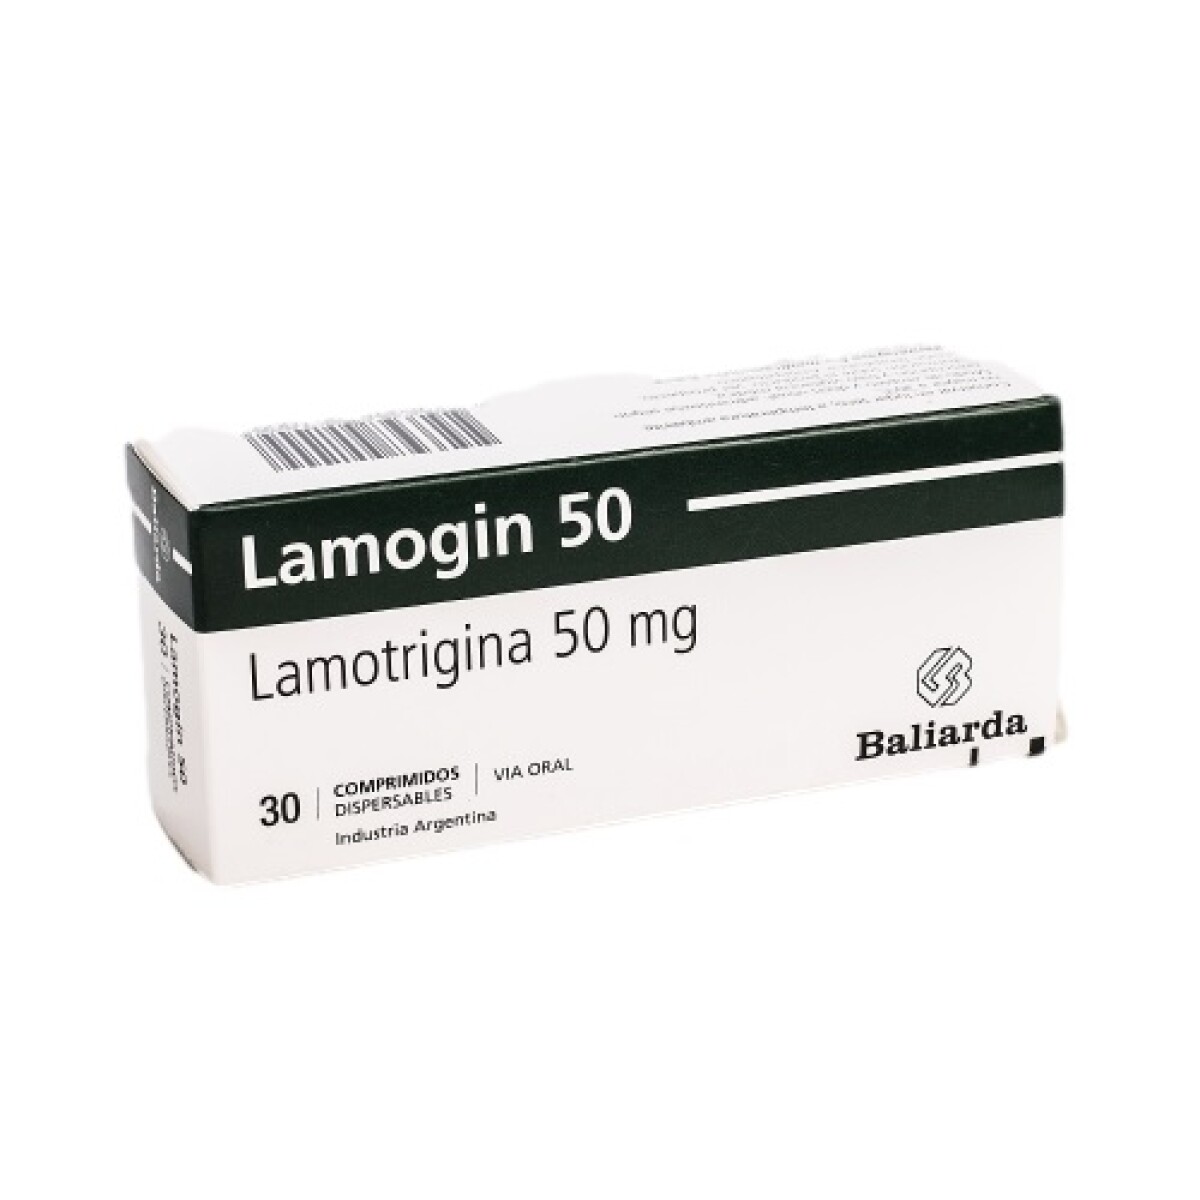 Lamogin 50 Mg. 30 Comp. Dispersables 